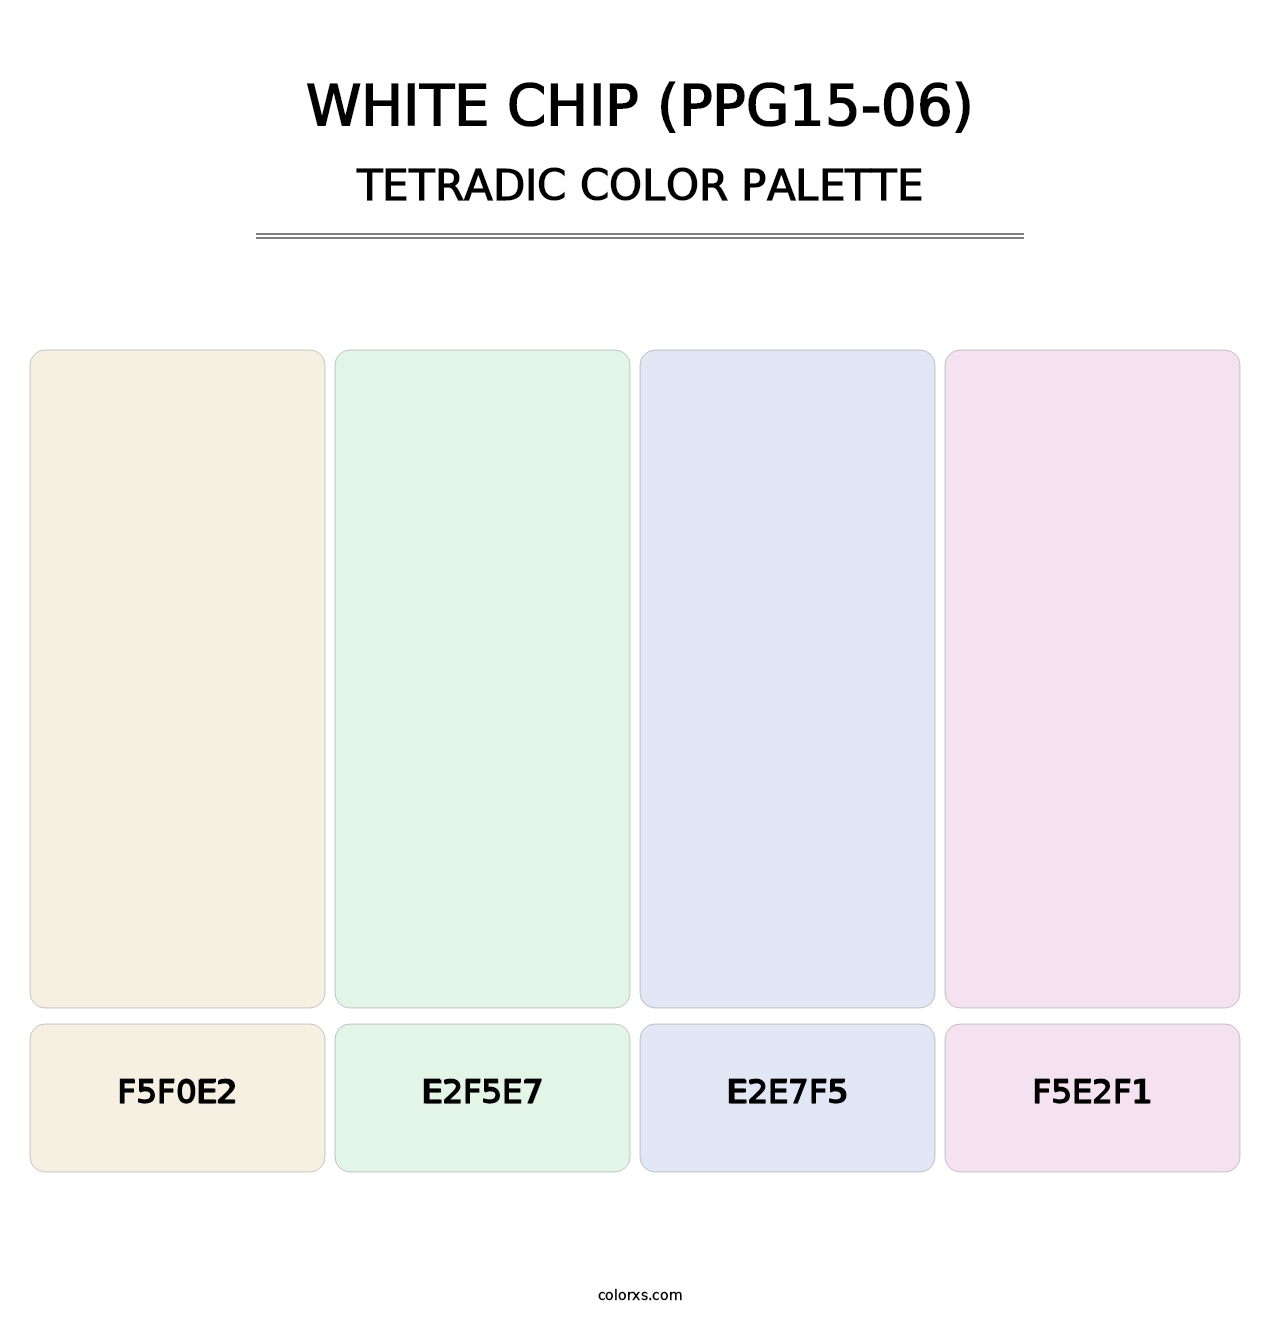 White Chip (PPG15-06) - Tetradic Color Palette